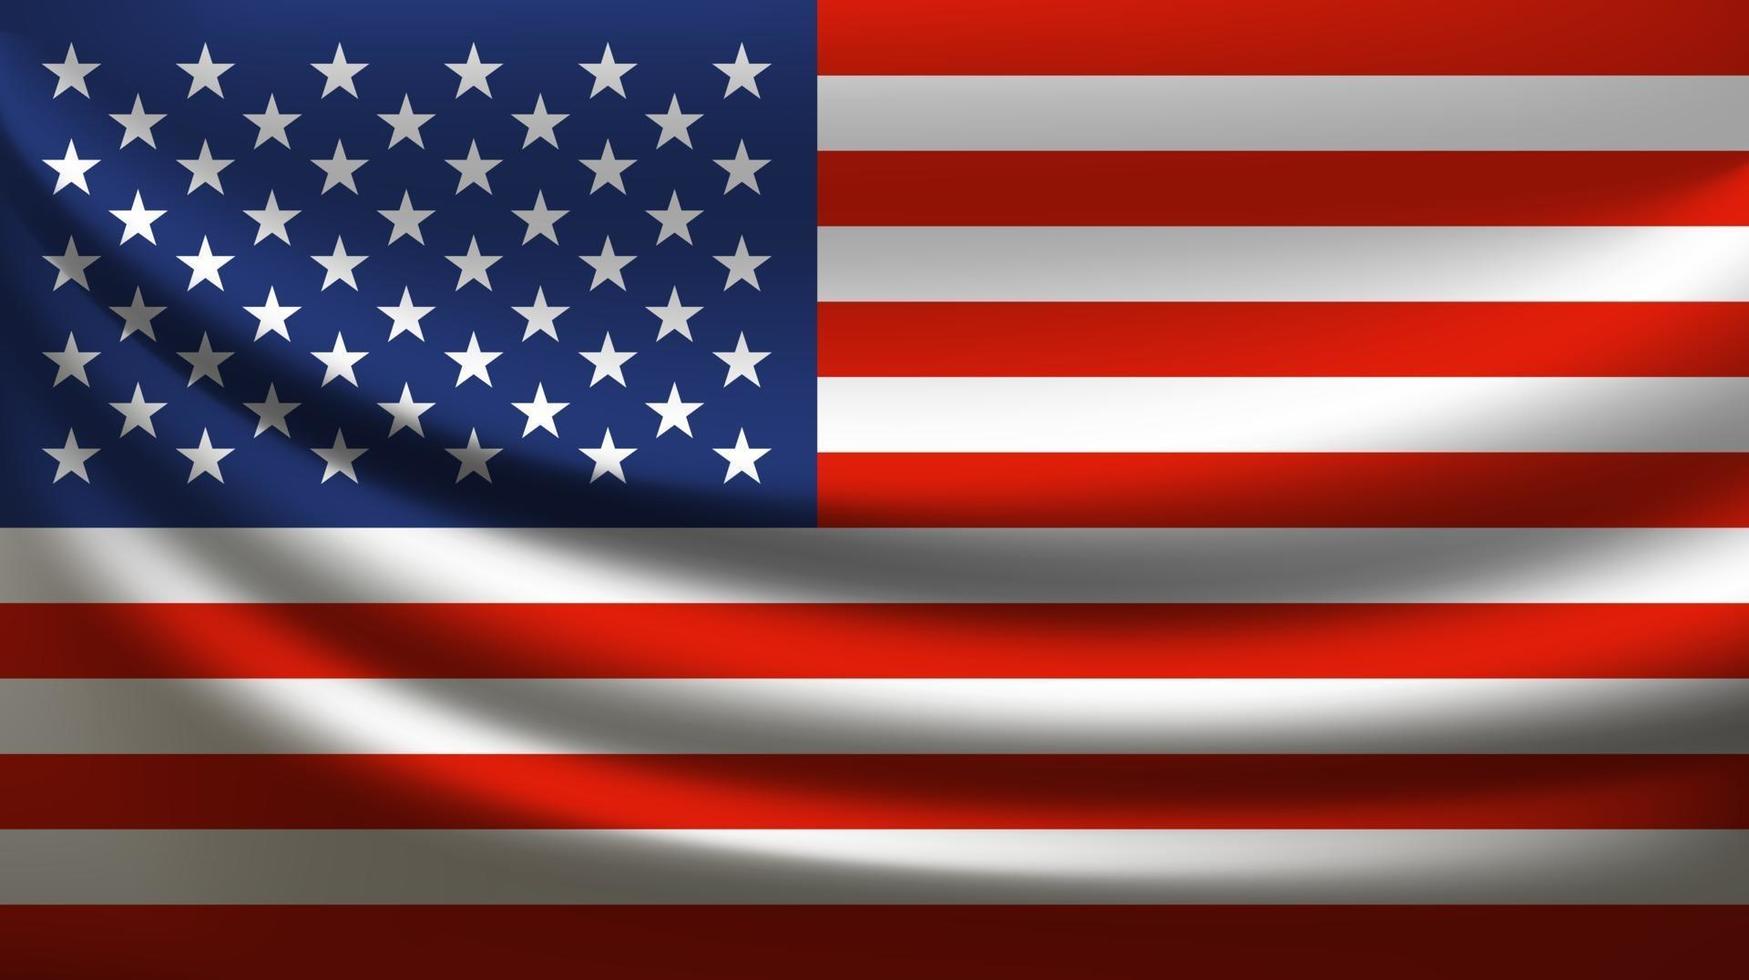 United States Flag Waving Clip Art